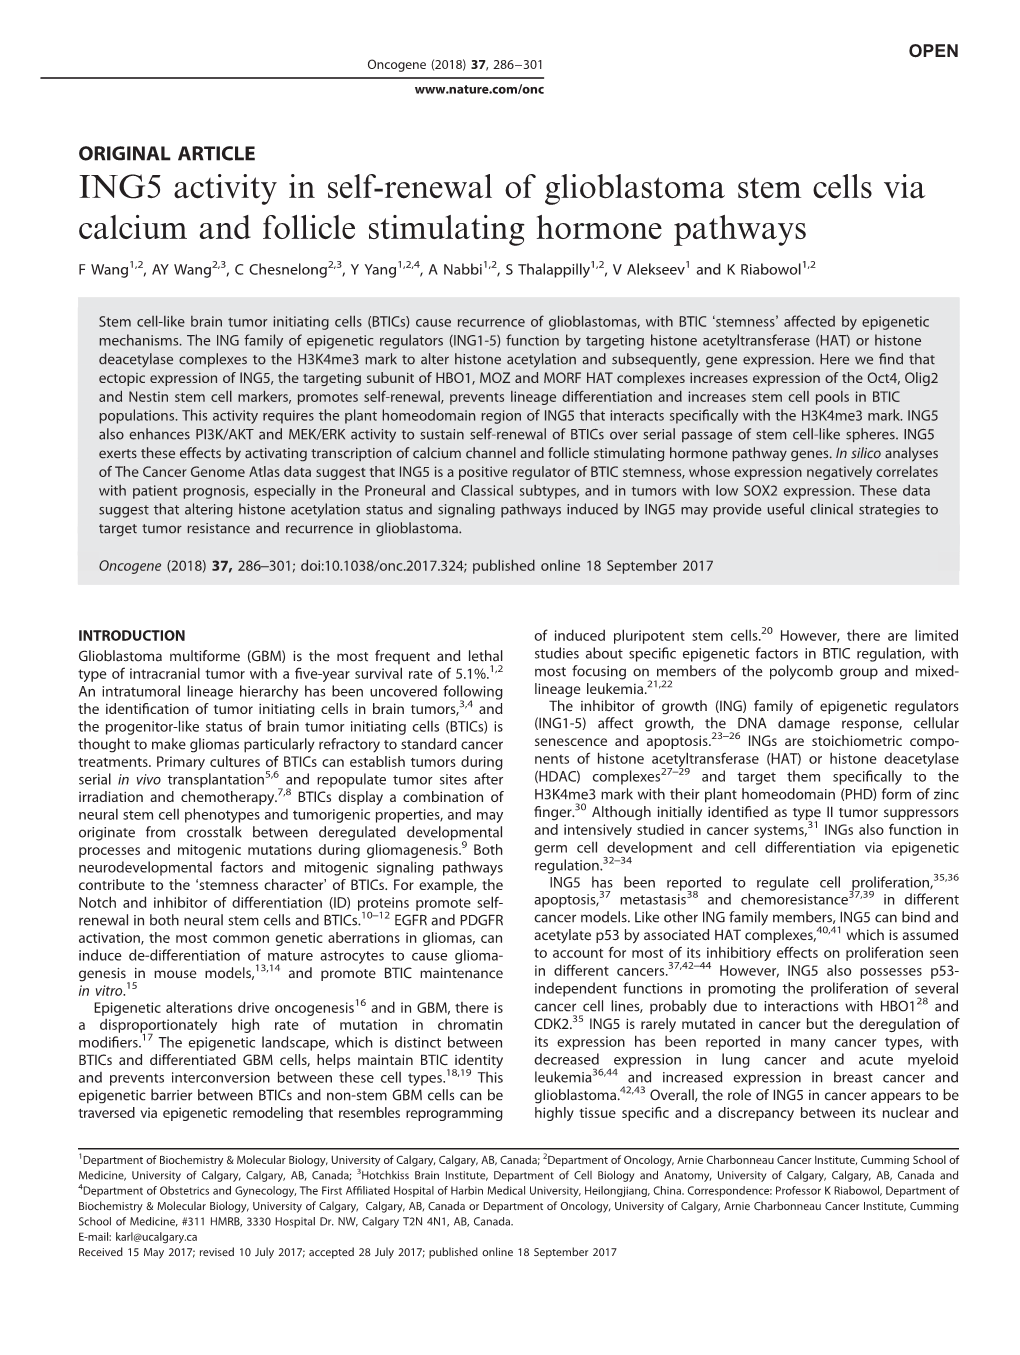 ING5 Activity in Self-Renewal of Glioblastoma Stem Cells Via Calcium and Follicle Stimulating Hormone Pathways